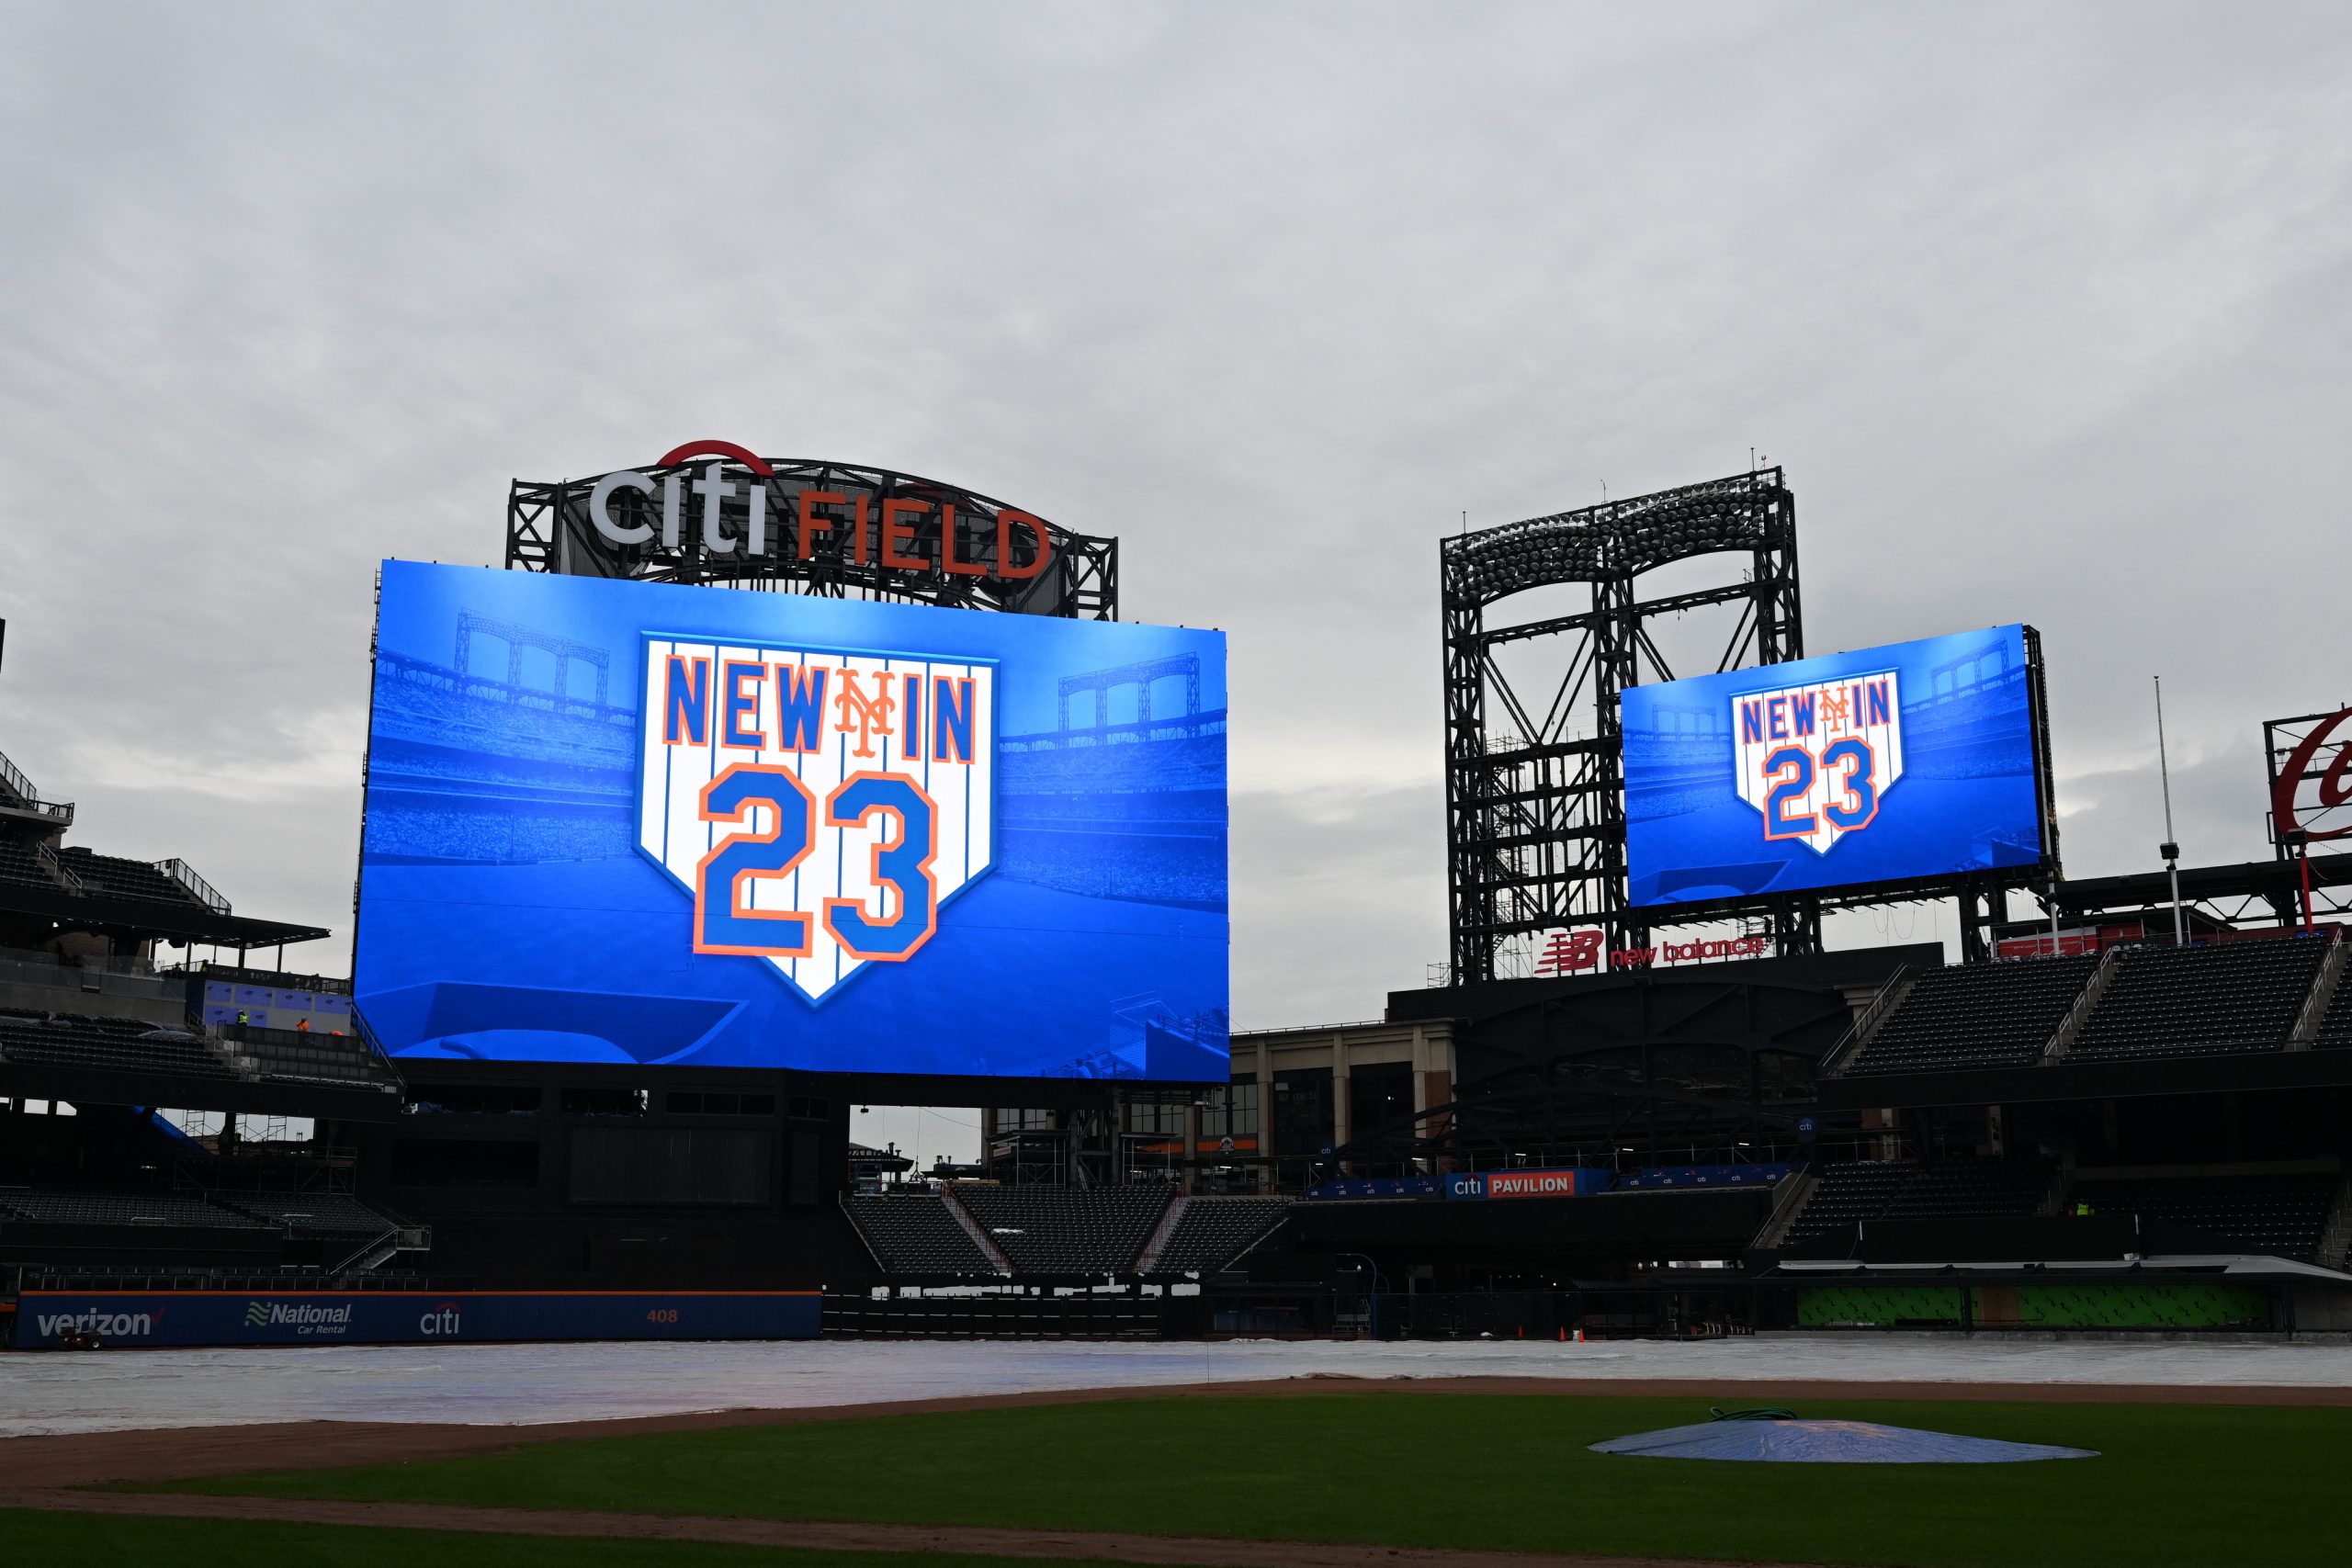 Samsung Electronics & New York Mets unveil largest ballpark scoreboard